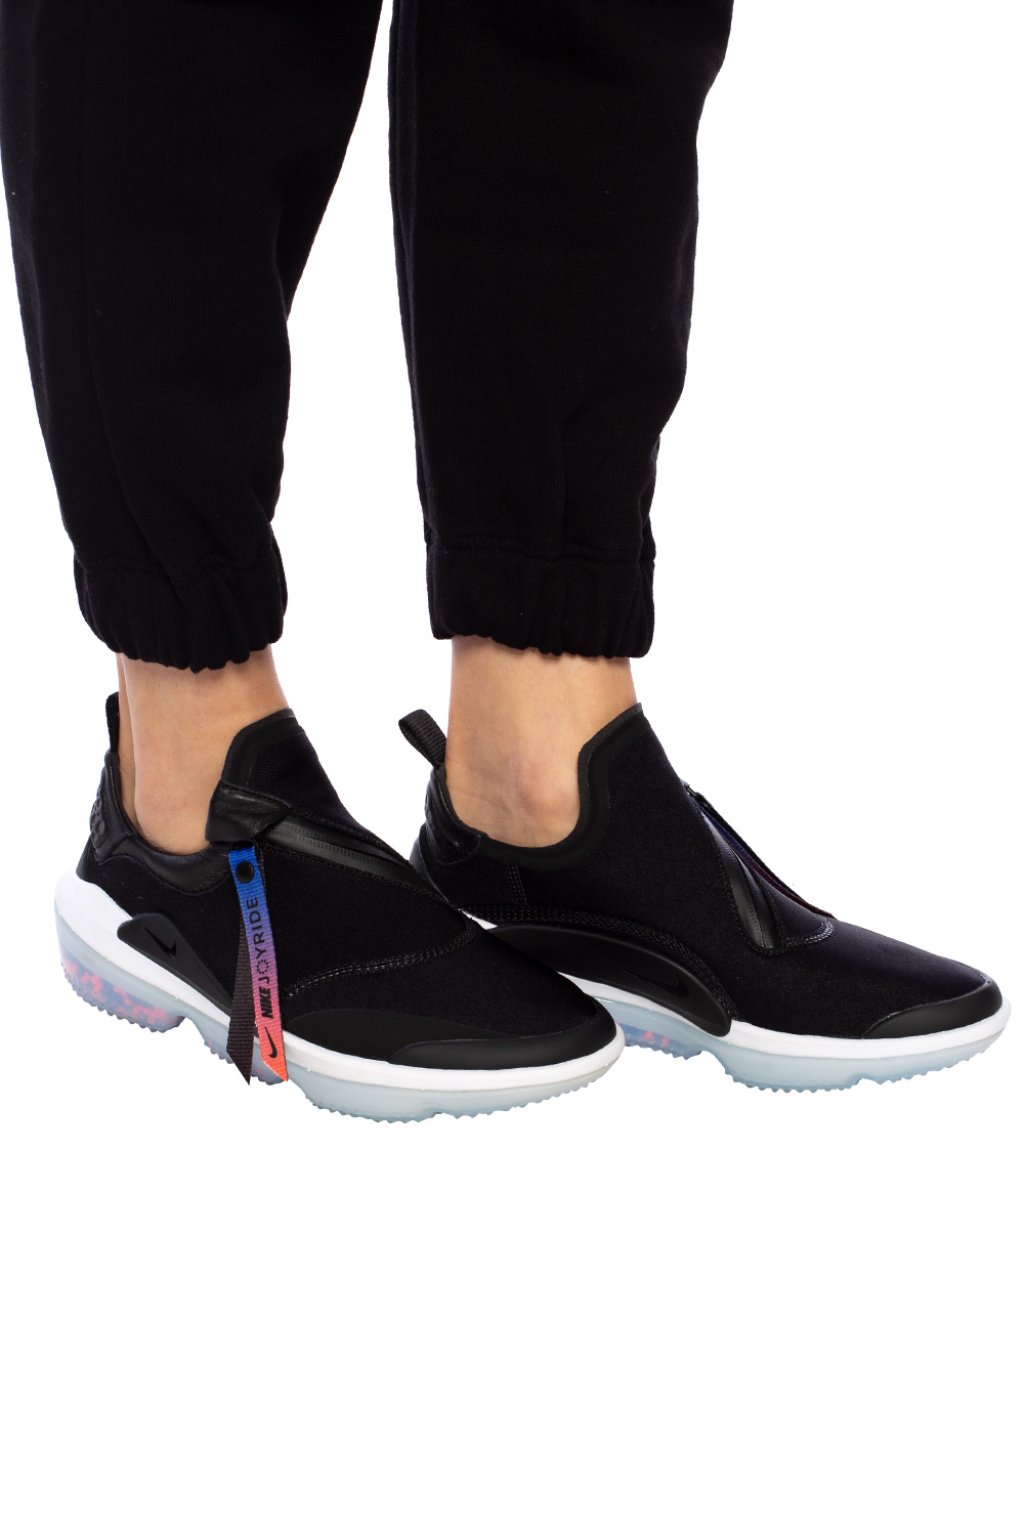 Joyride Optik' sneakers Nike - Vitkac HK